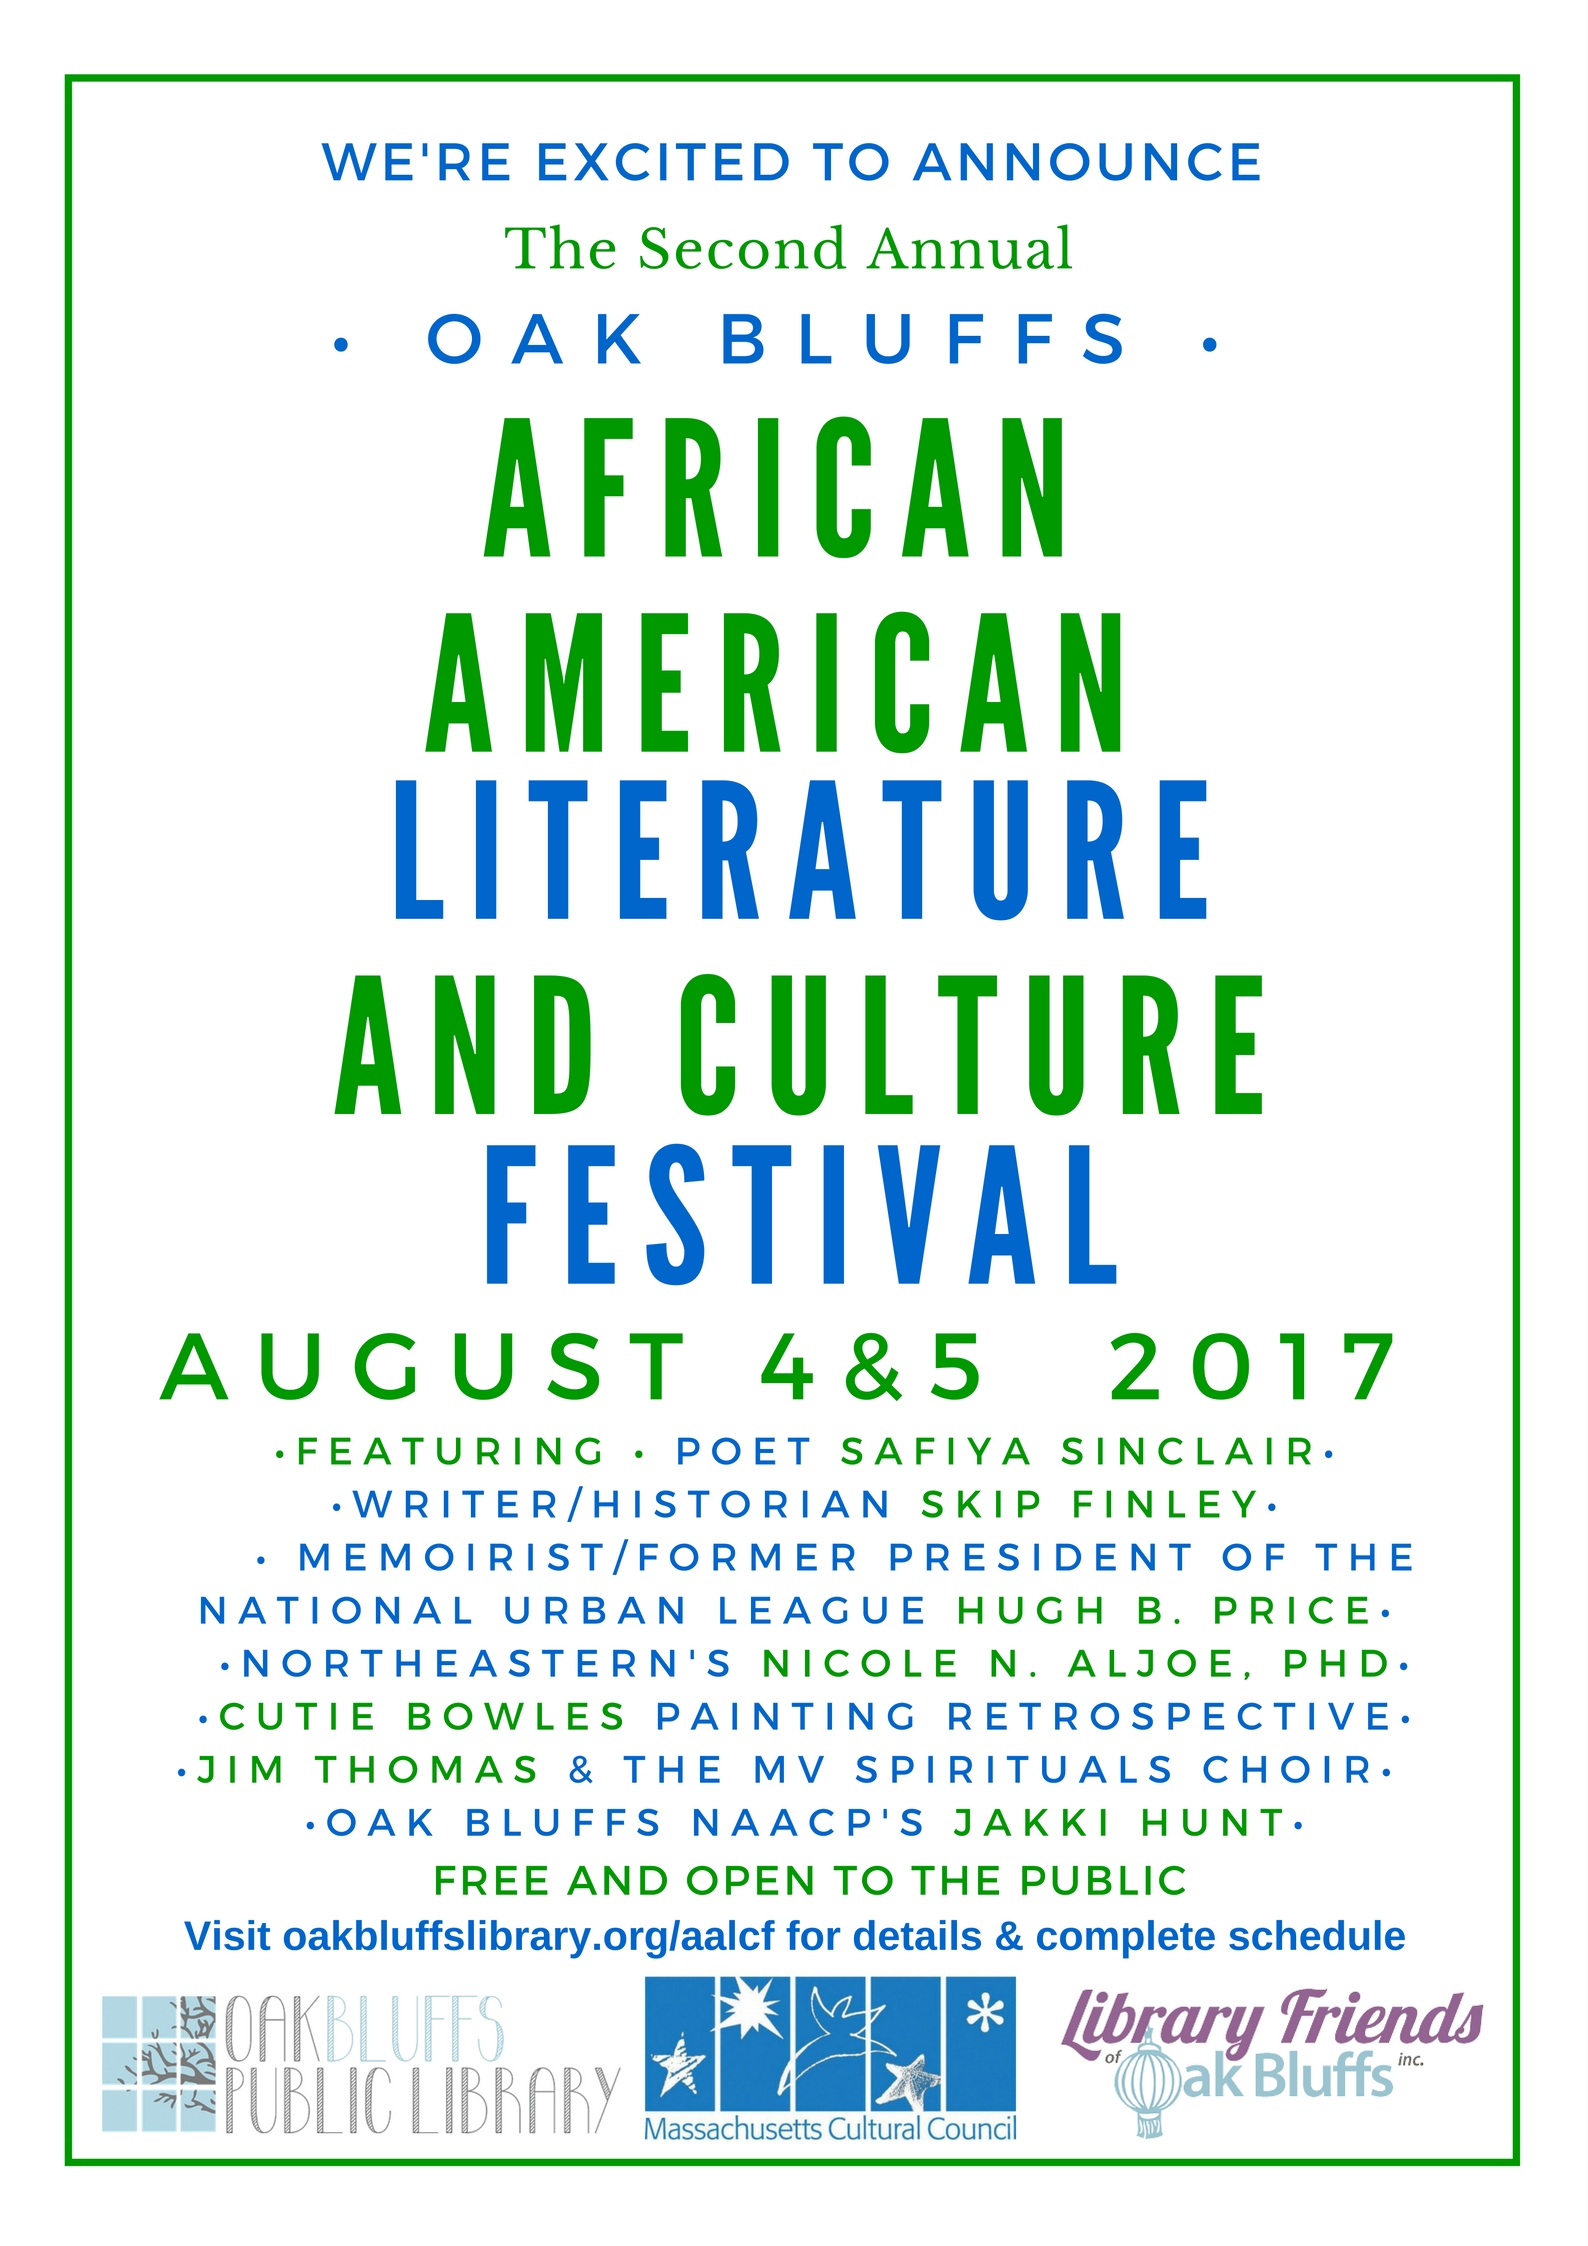 Sankofa Festival A Celebration Of African American Literature And Culture Oak Bluffs Library 